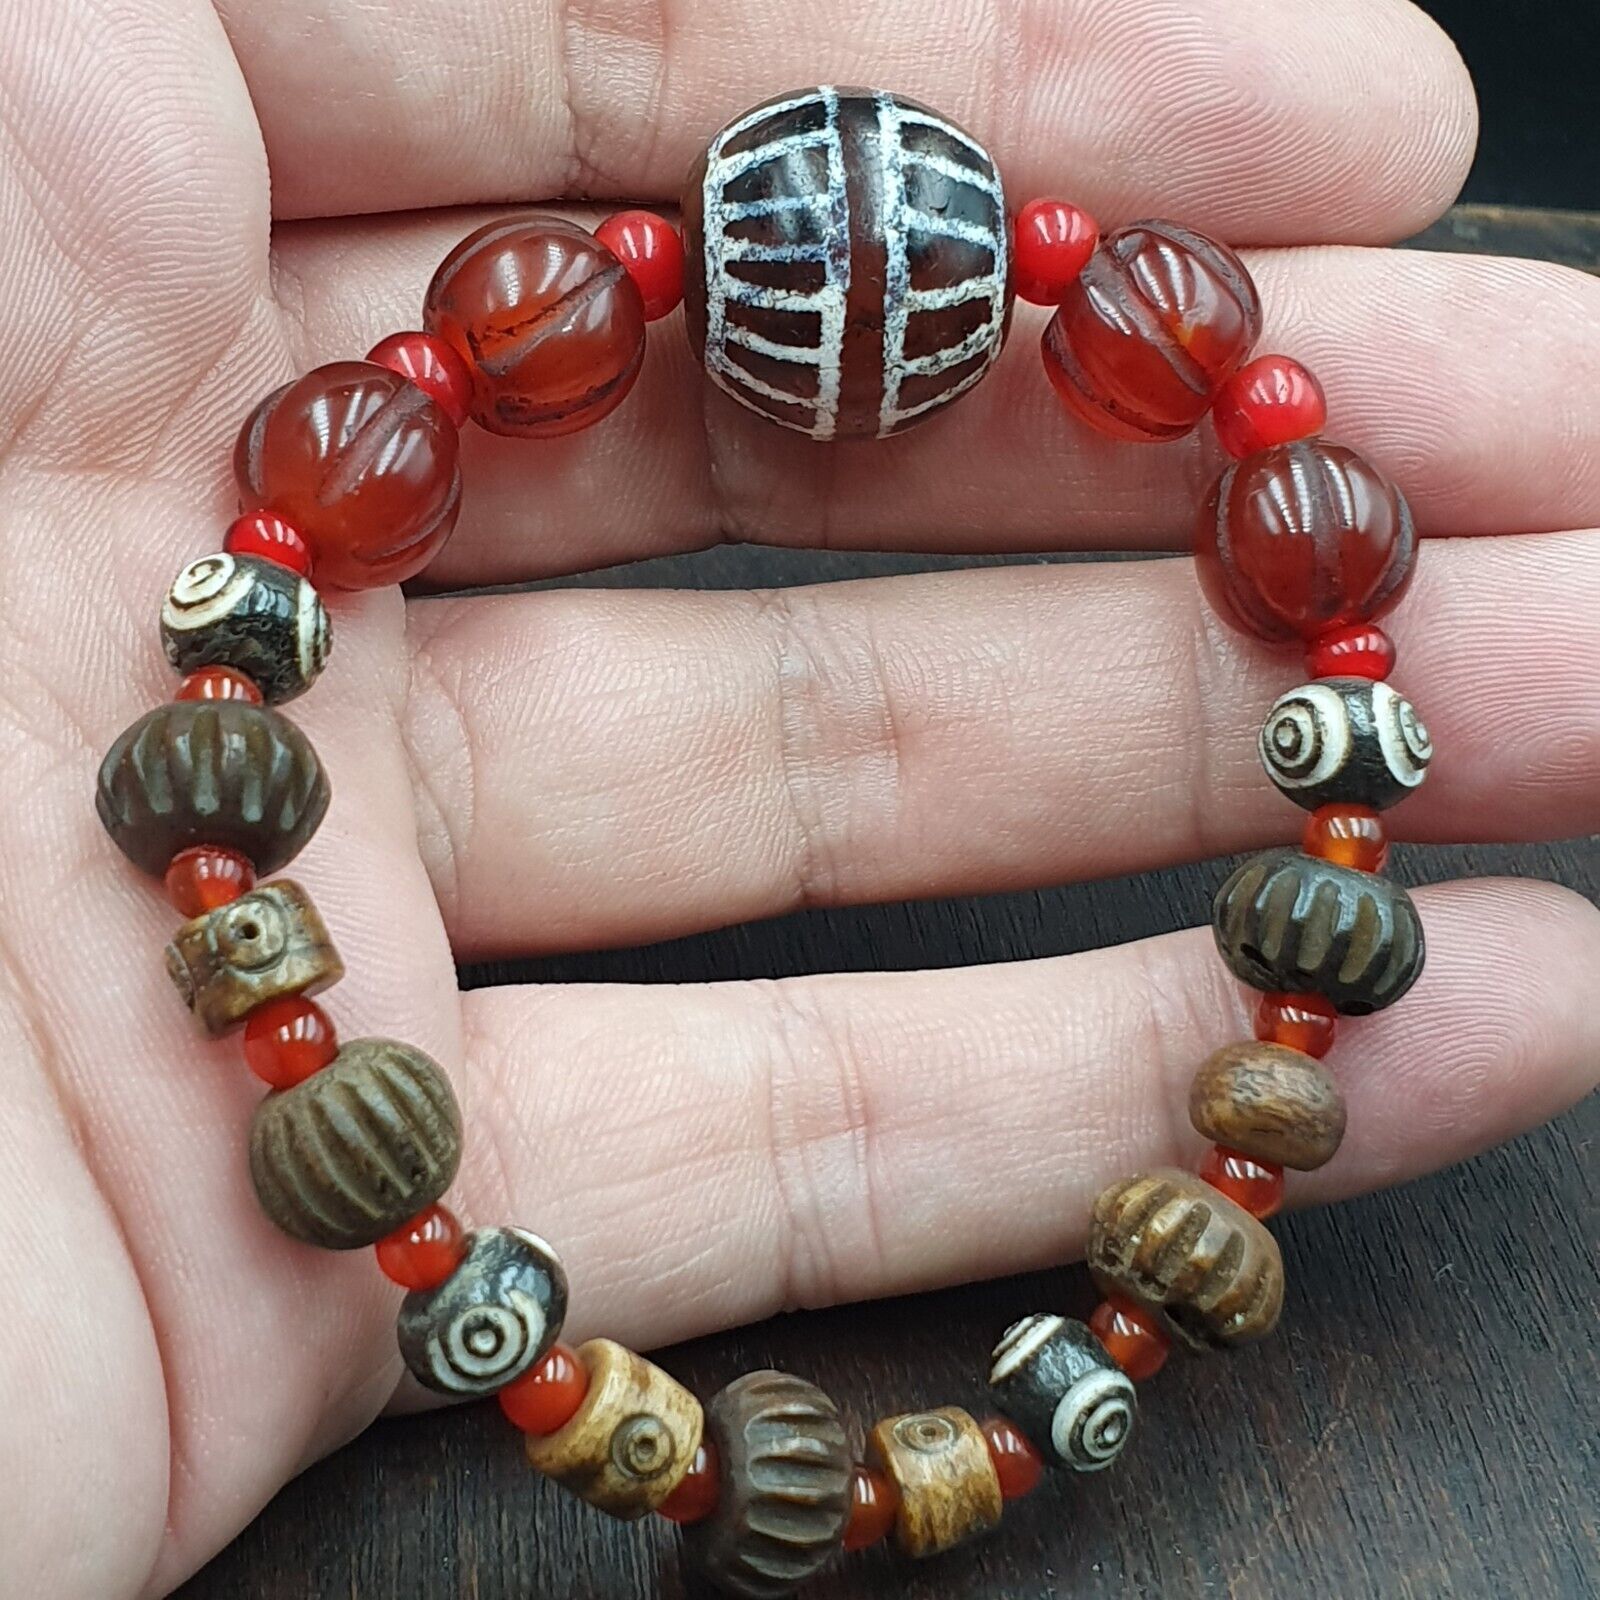 ETC-AGT Antique Tibetan Etched Agate Bead Decorated Carnelian Beads Bracelet